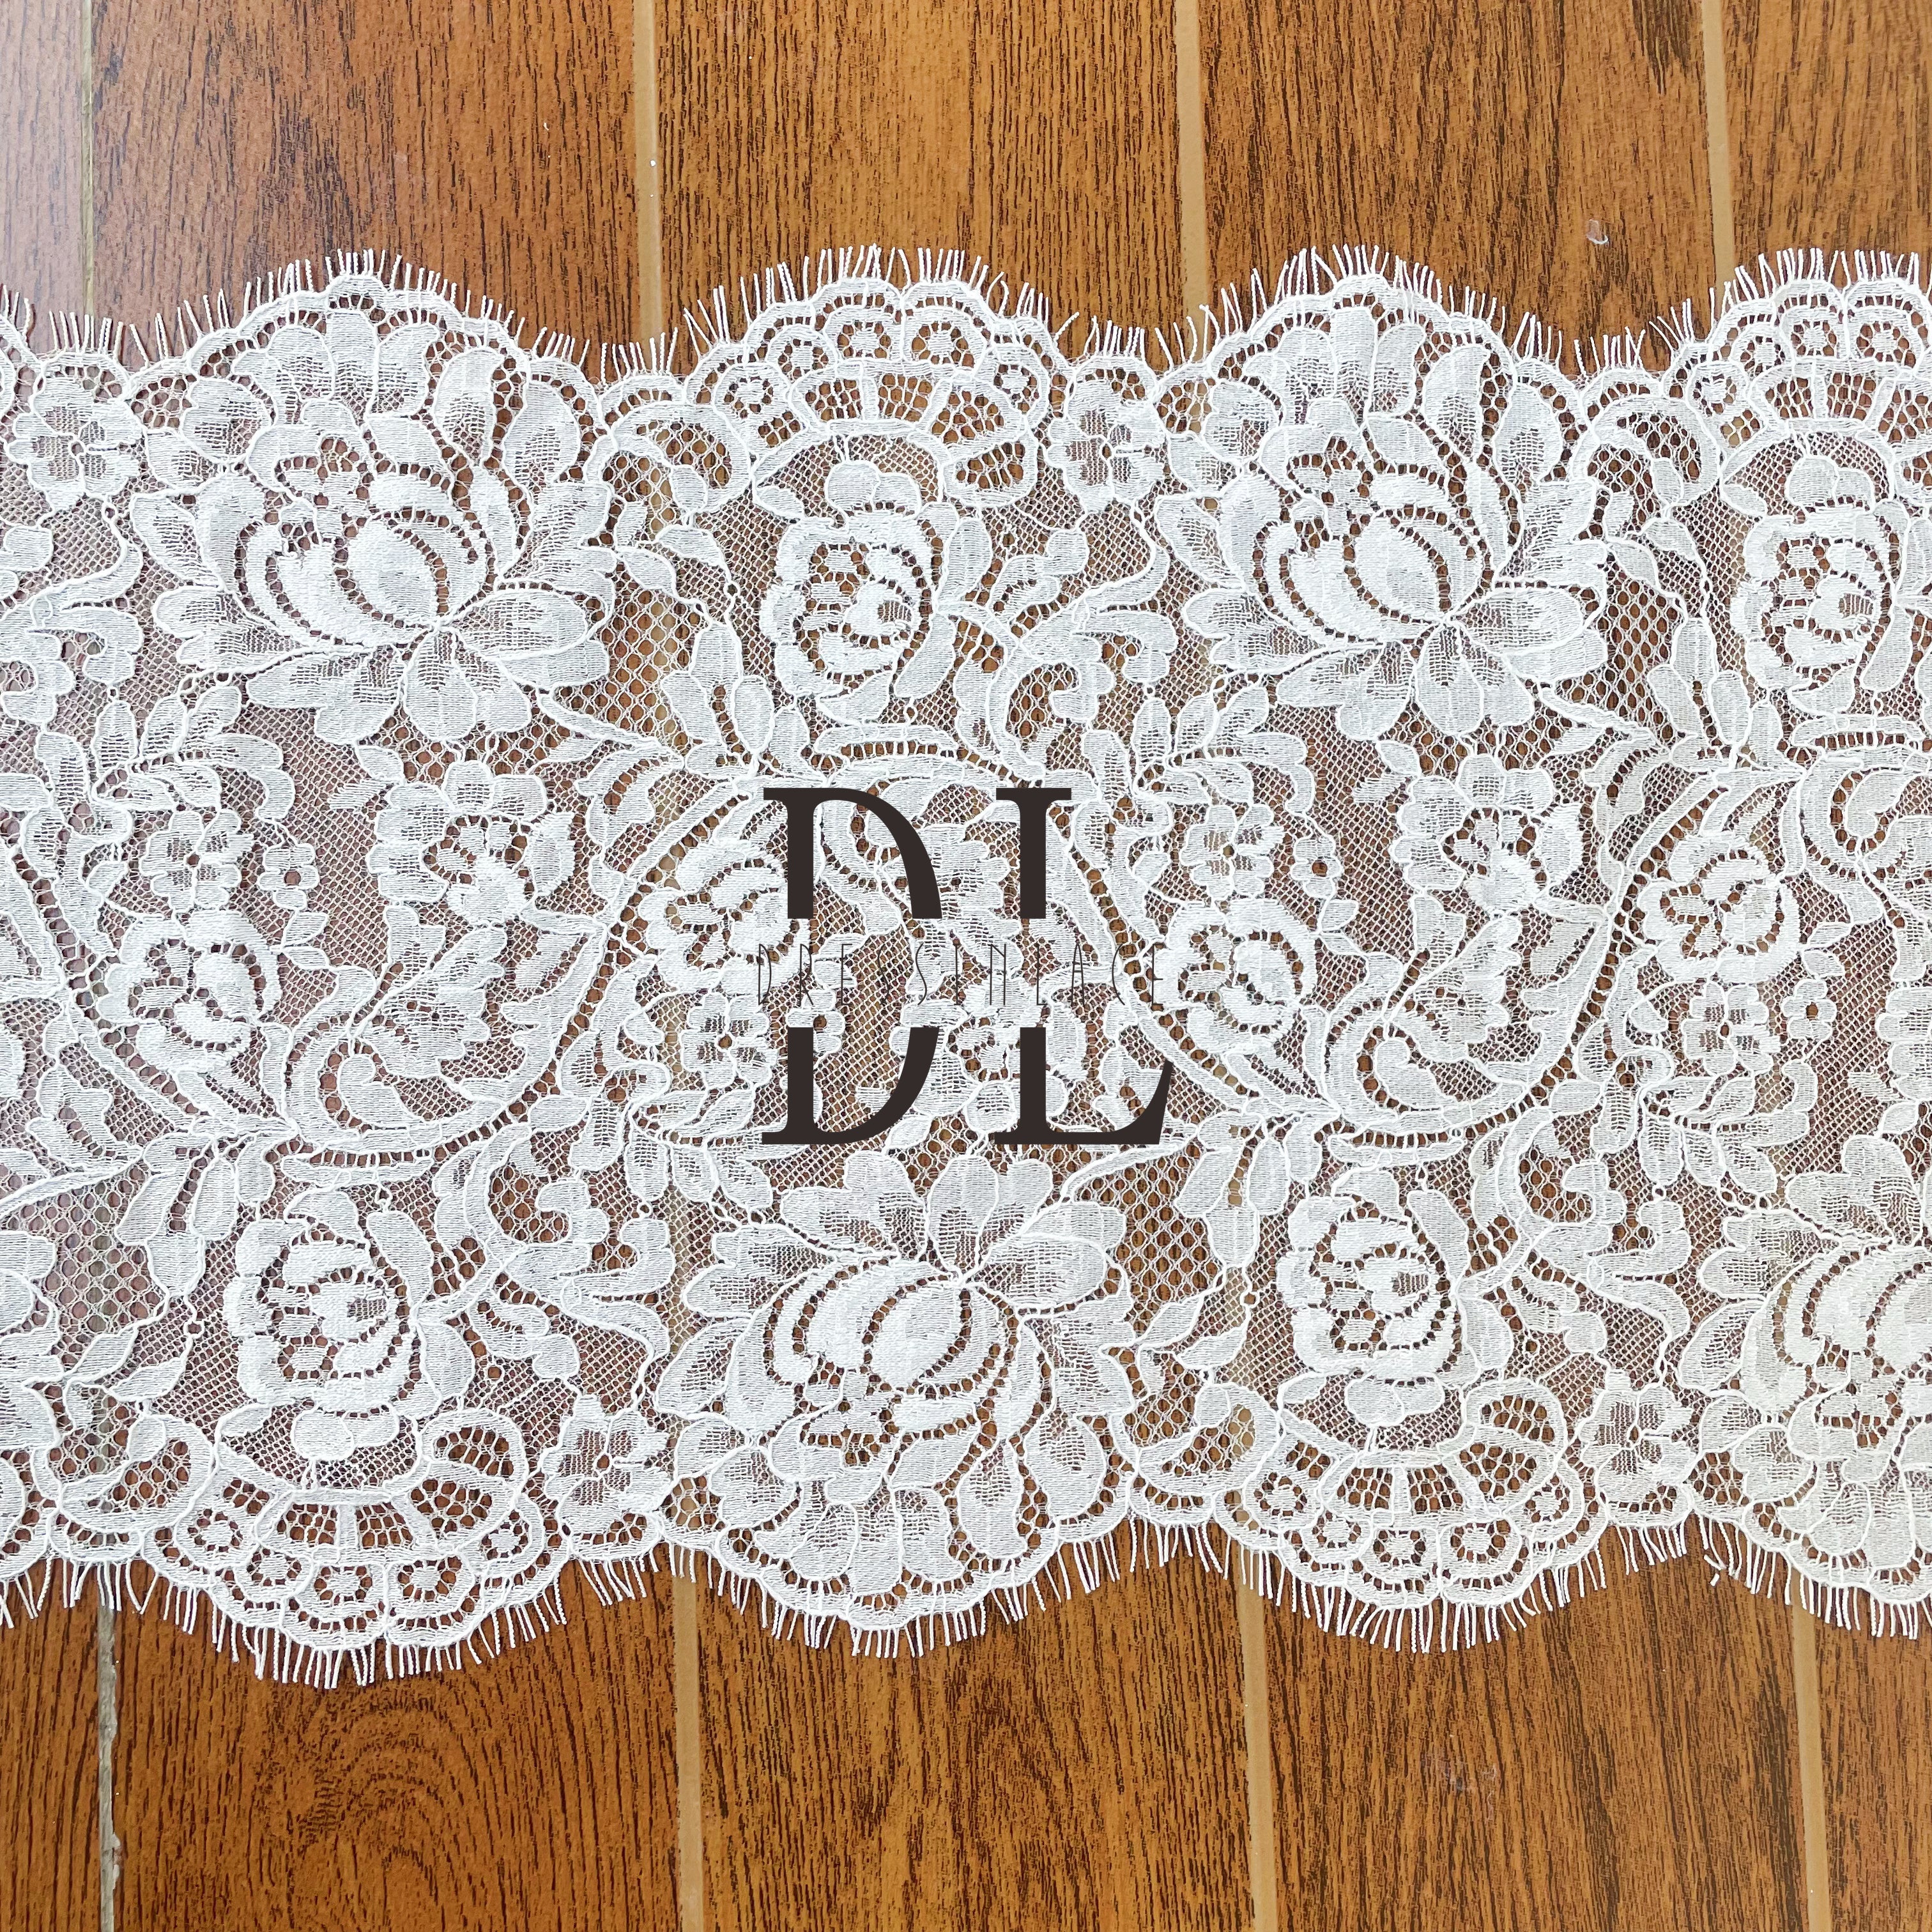 DLTL25199 Rose Flowers Trimming Lace Width 25cm For DIY Bridal Veils Garment Dresses